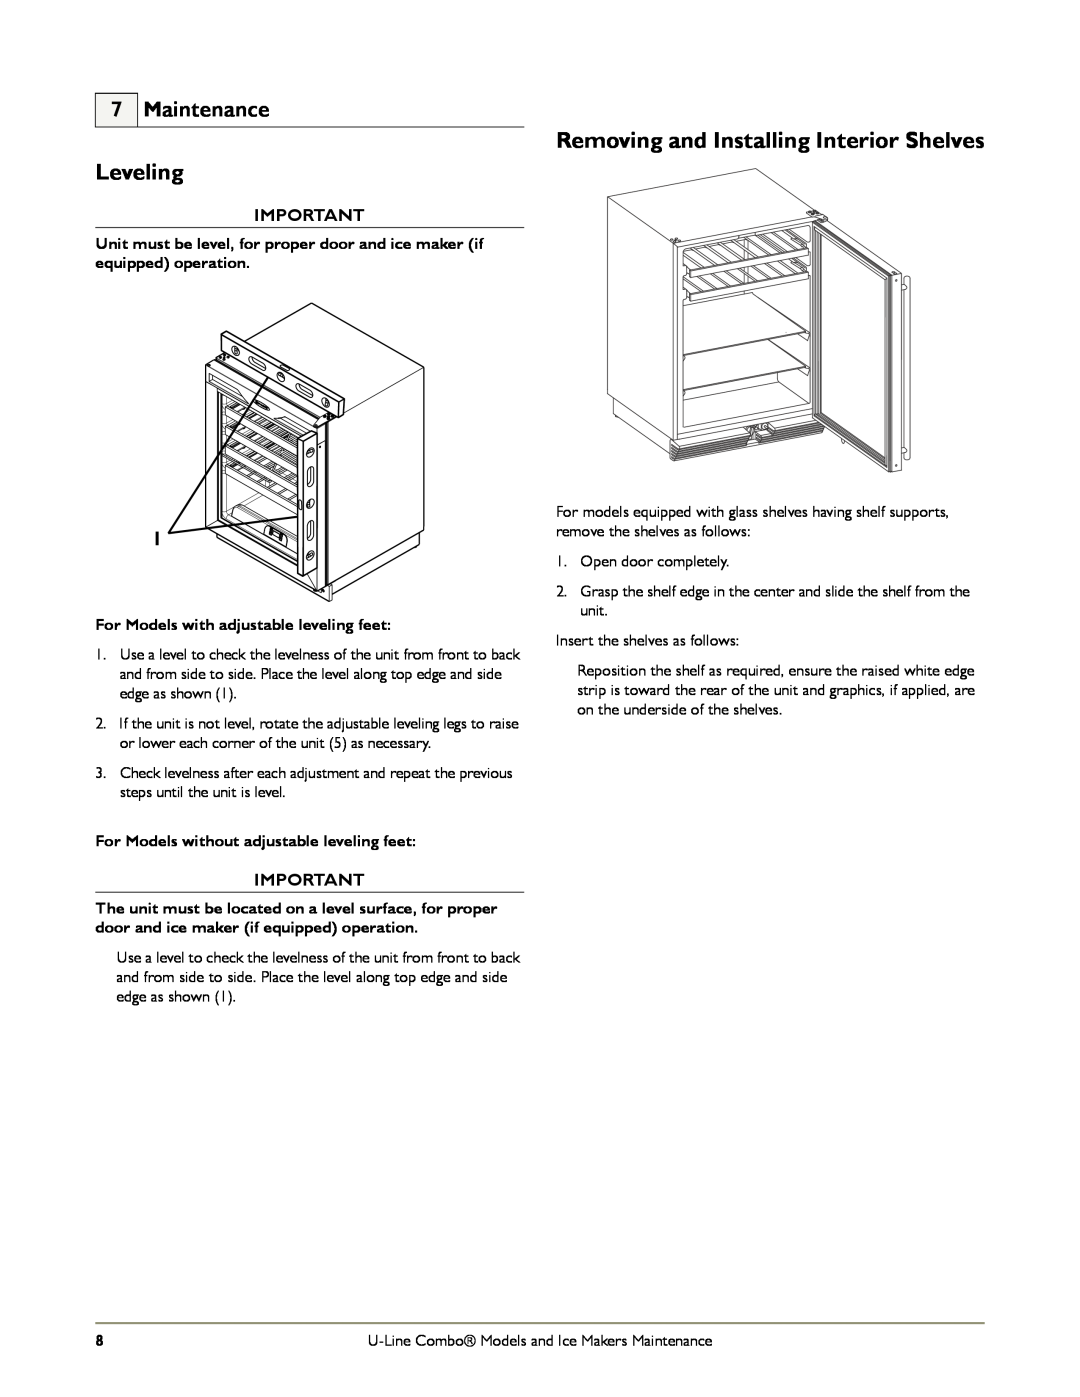 U-Line ADA151M, B198, B12115 manual Leveling, Removing and Installing Interior Shelves, Maintenance 